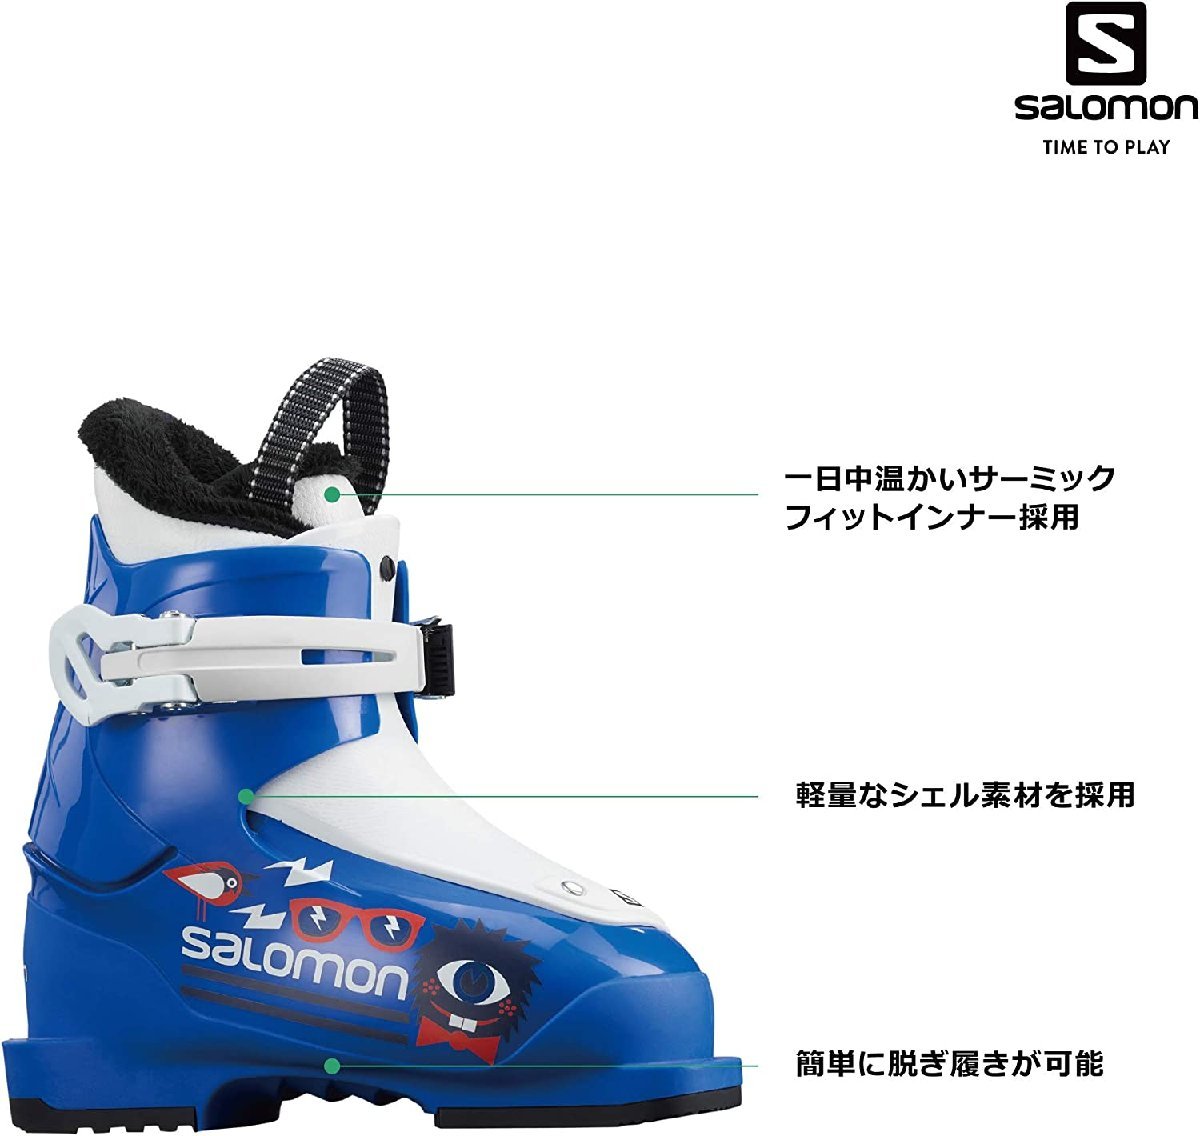 SALOMON ( Salomon ) лыжи ботинки Junior T1 Race Blue 17.0cm